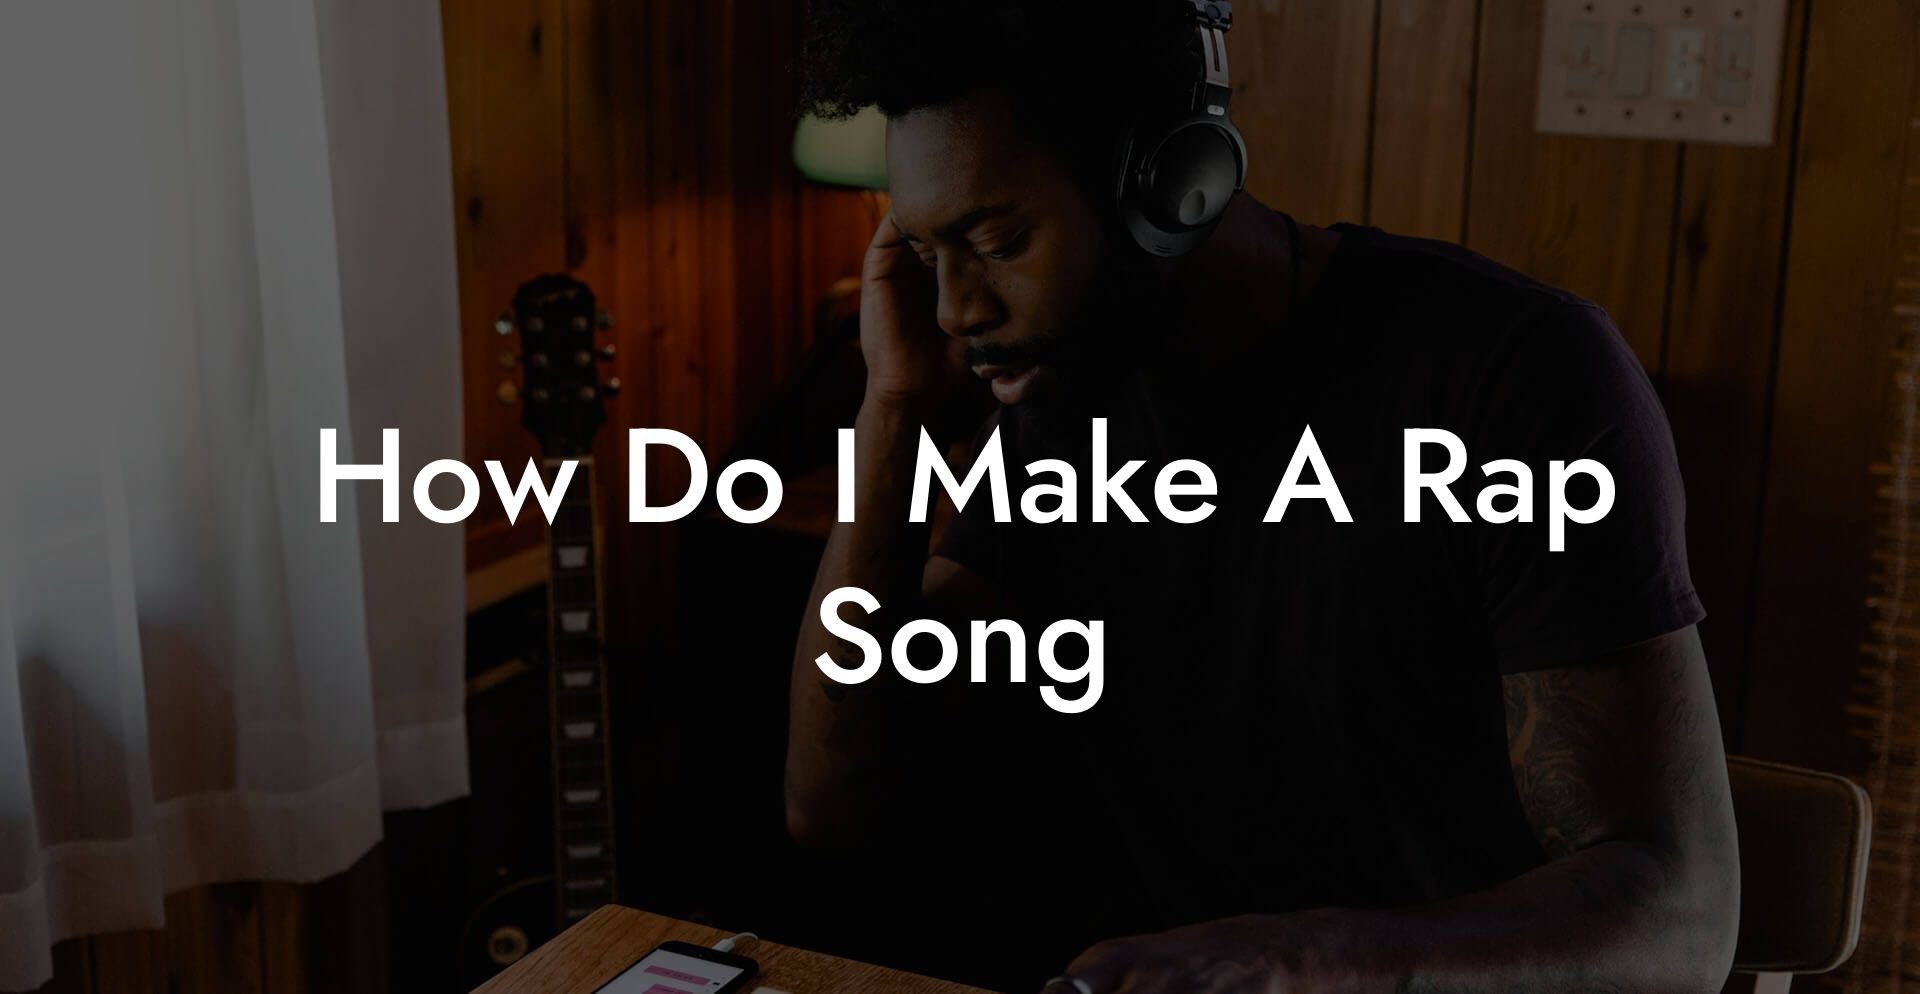 how do i make a rap song lyric assistant